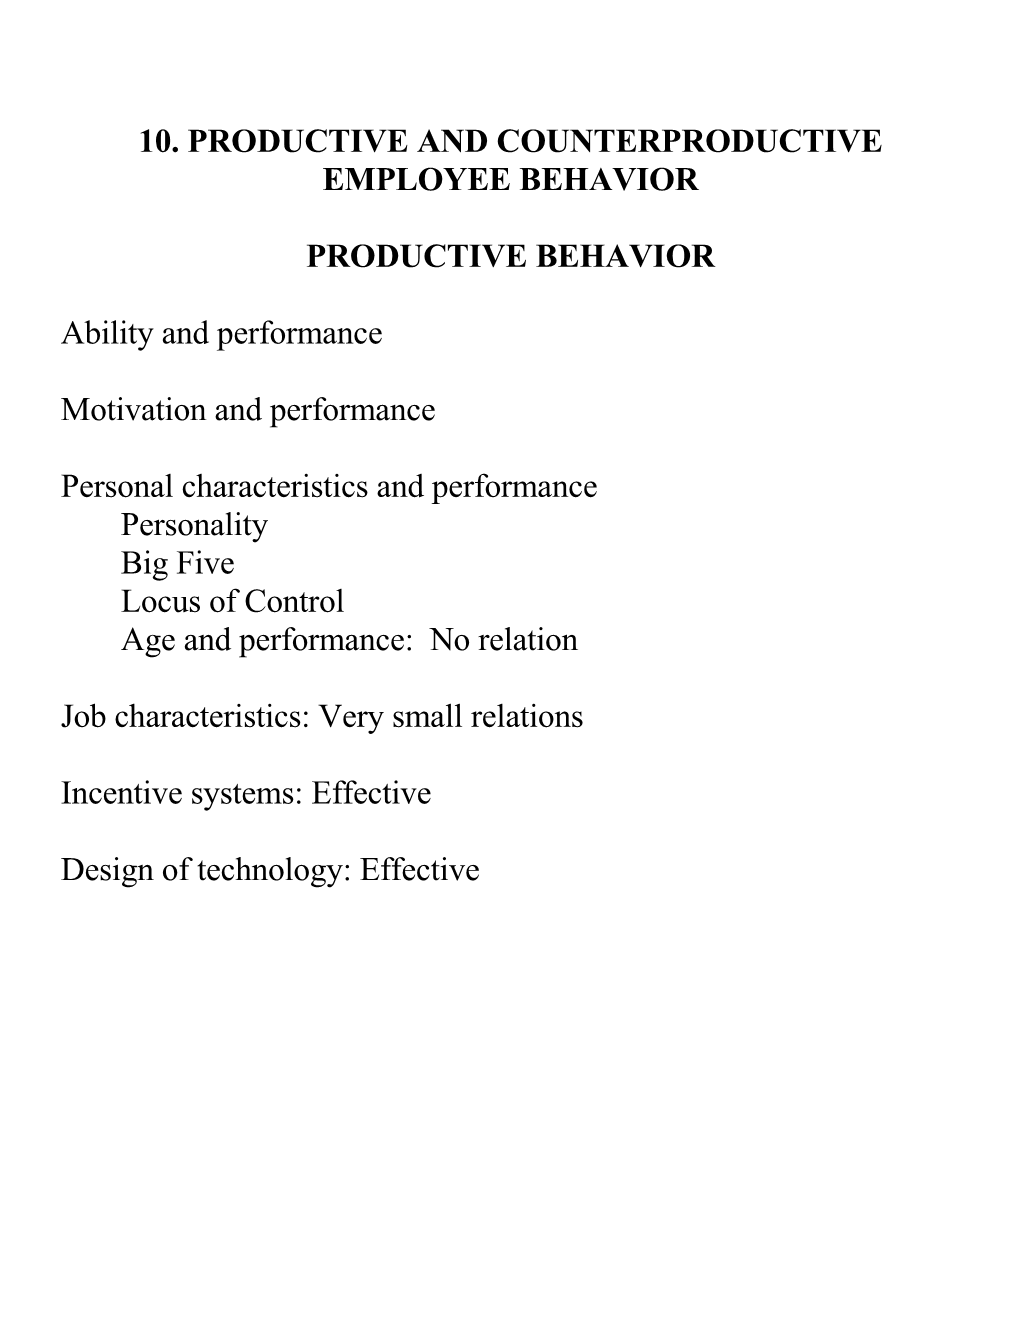 10. Productive and Counterproductive Employee Behavior